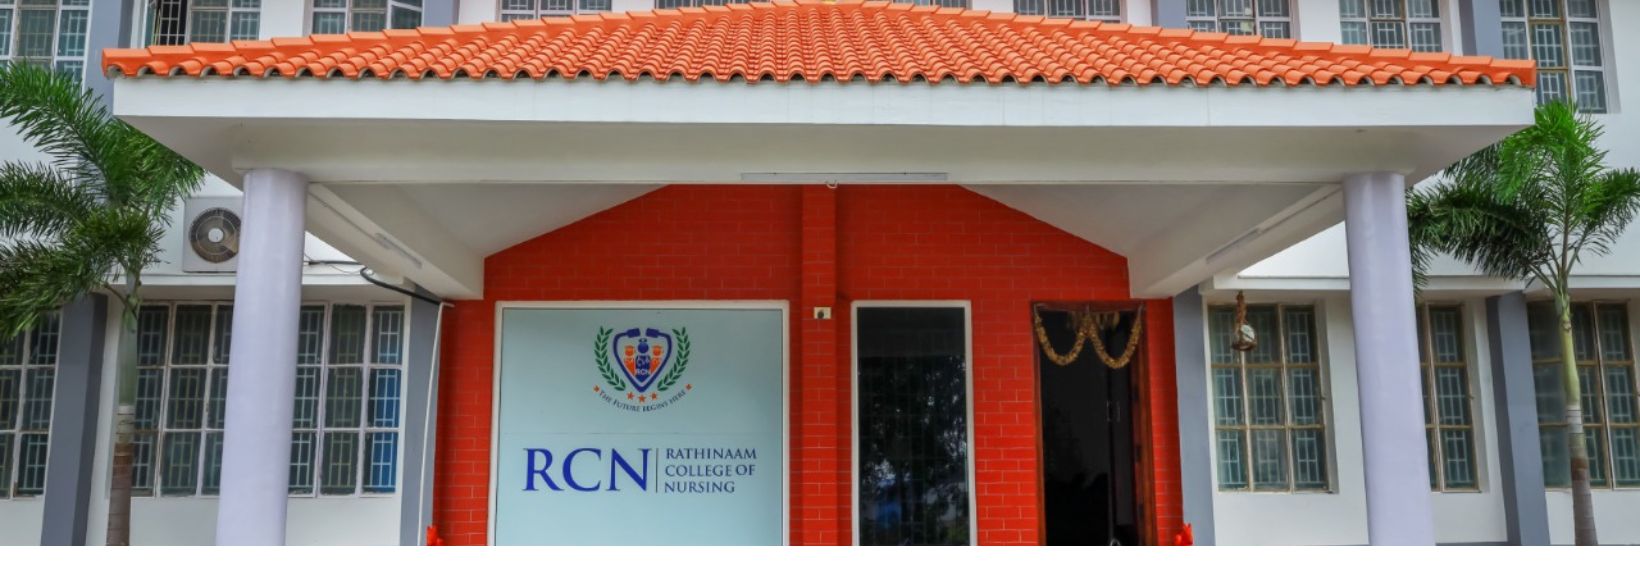 Rathinaam College of Nursing - Virudhunagar